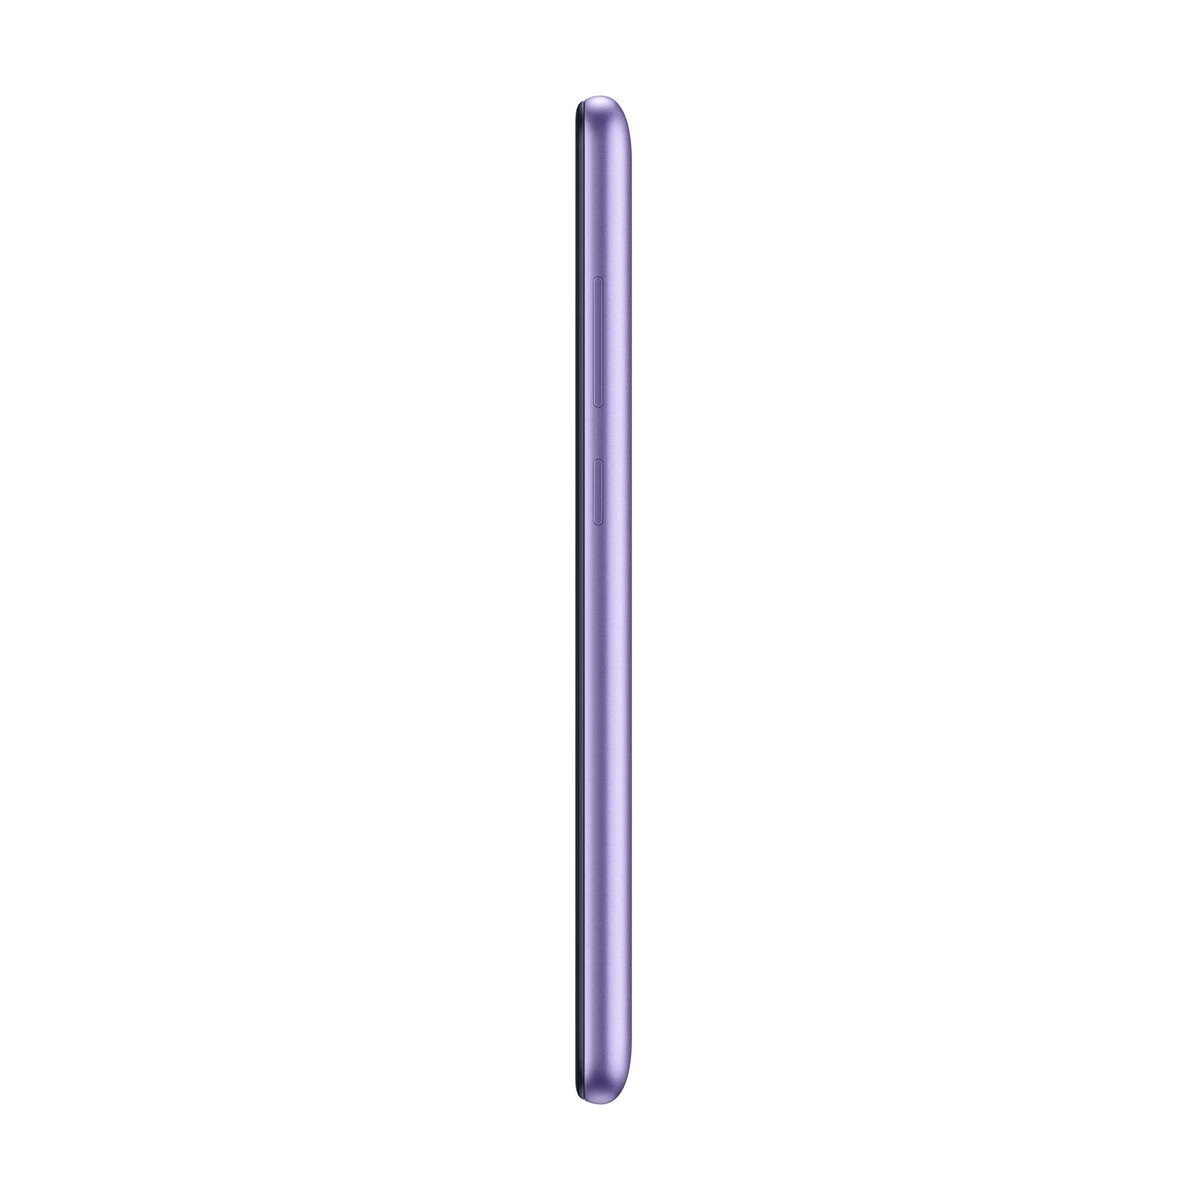 Samsung Galaxy M11 -SMM115 32GB Violet